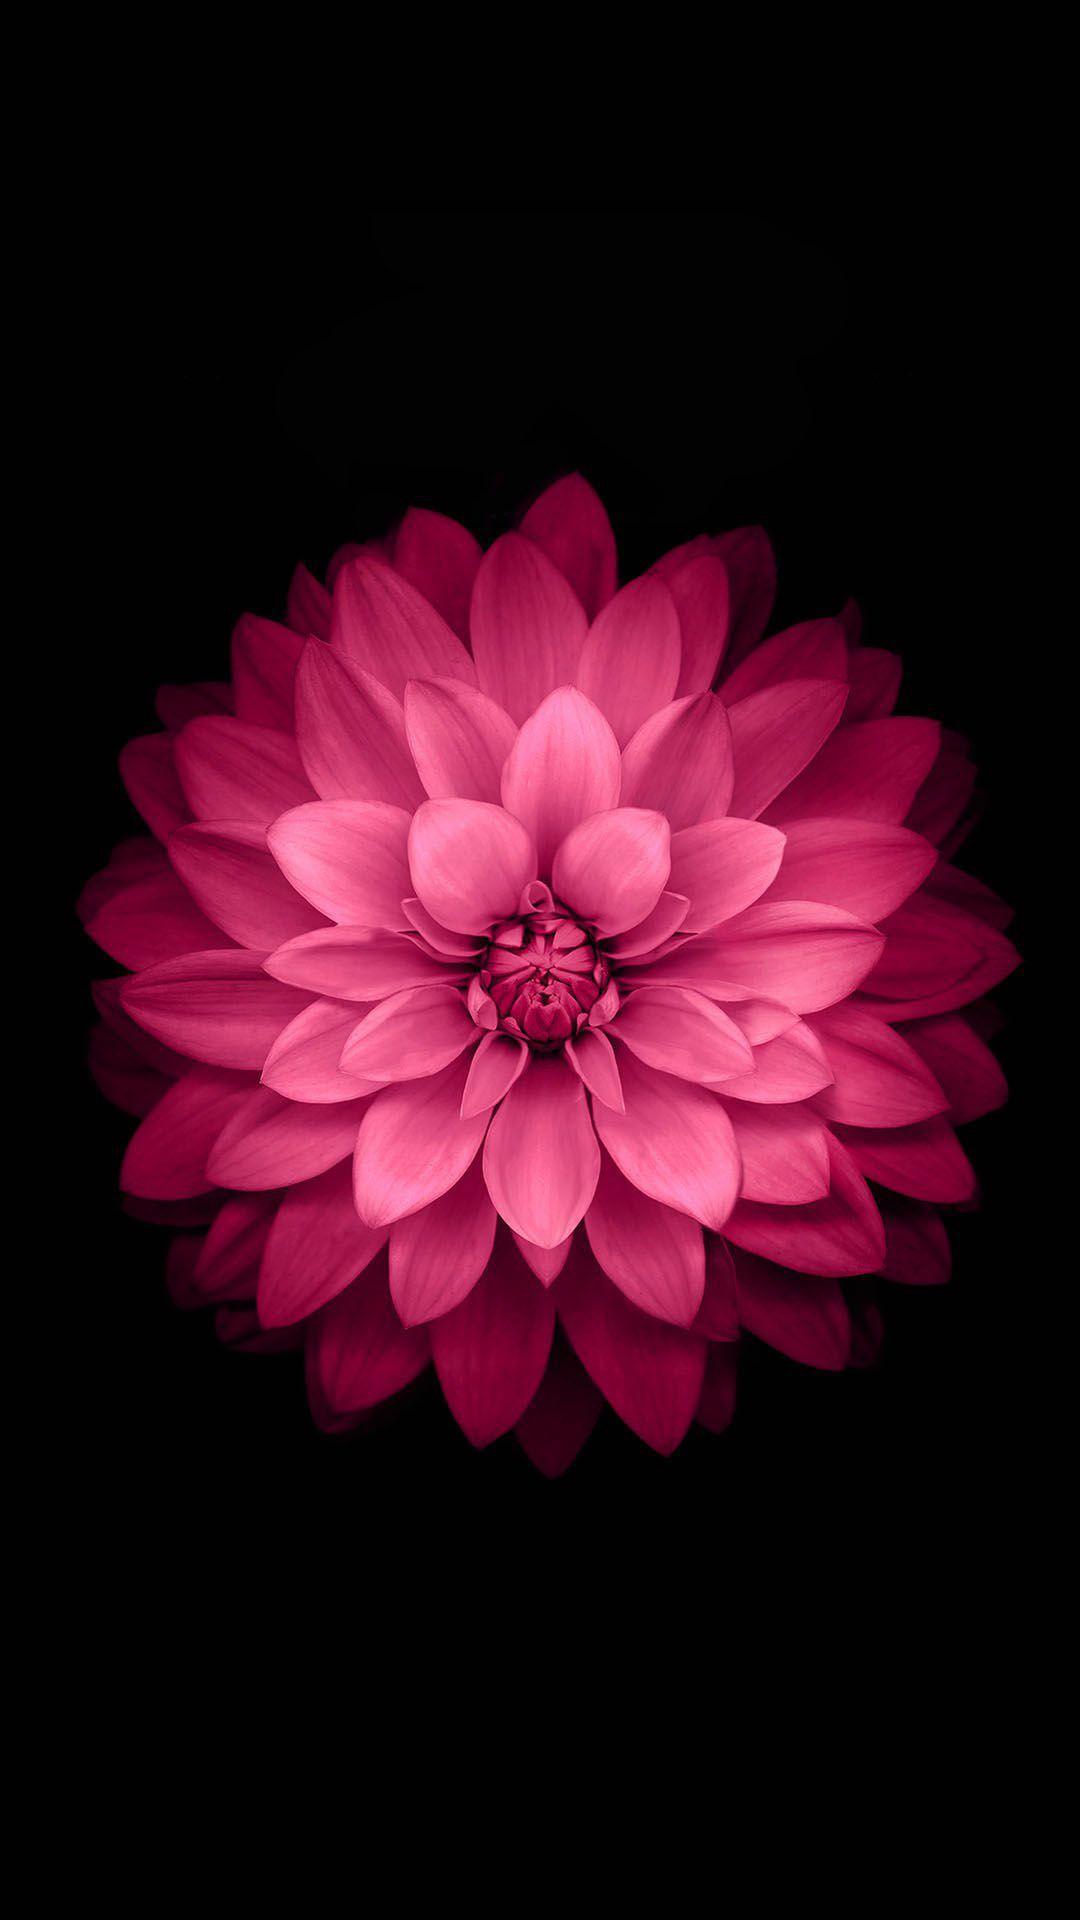 Pink Lotus Flower Android Wallpaper free download